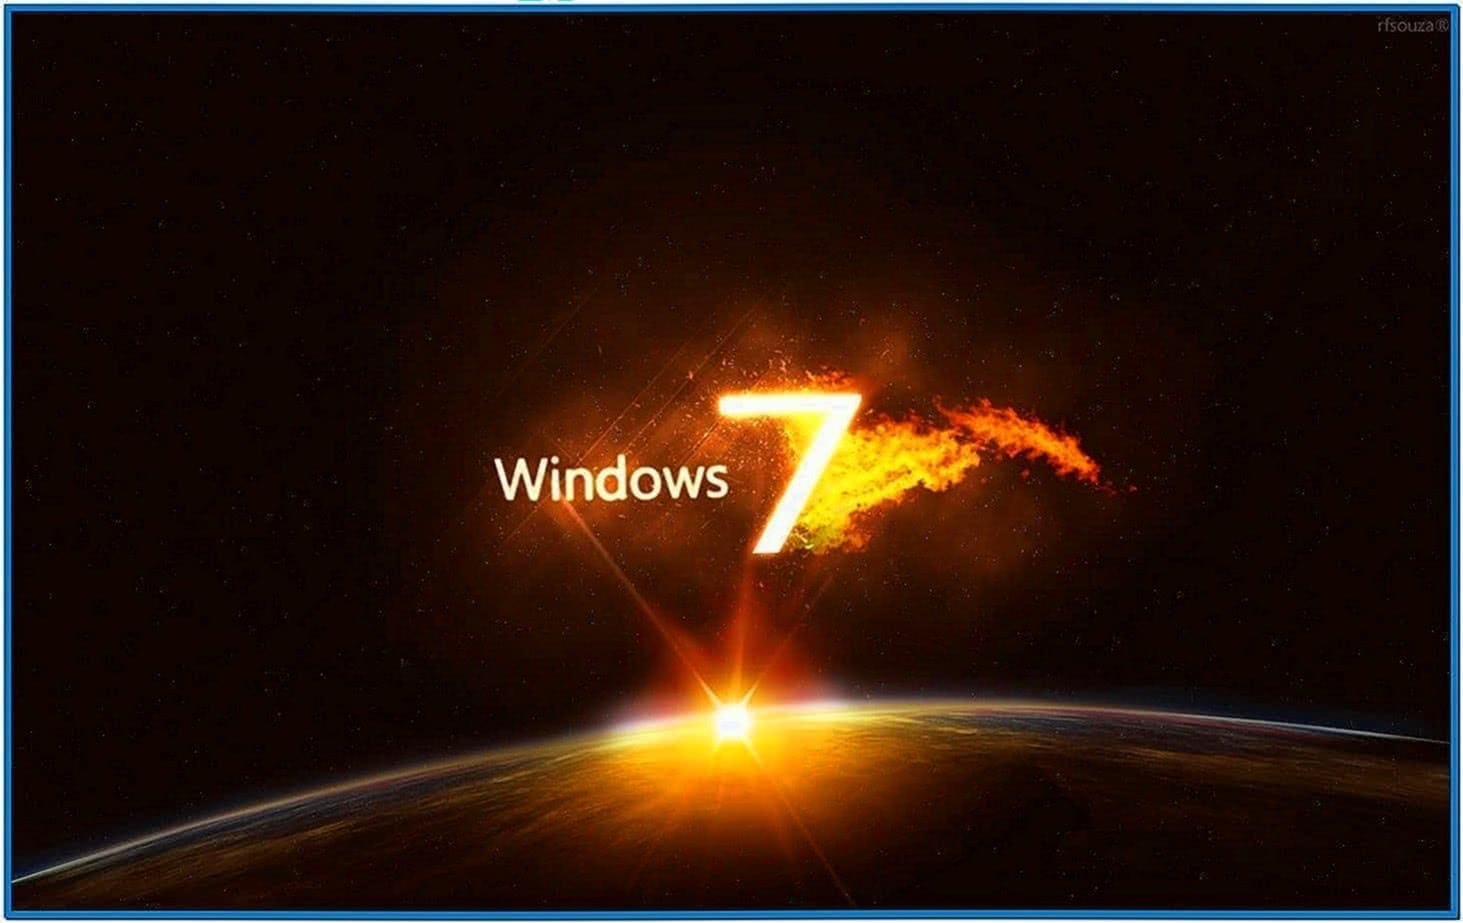 Afudos Bios Update Tool Windows 7 64 Bit